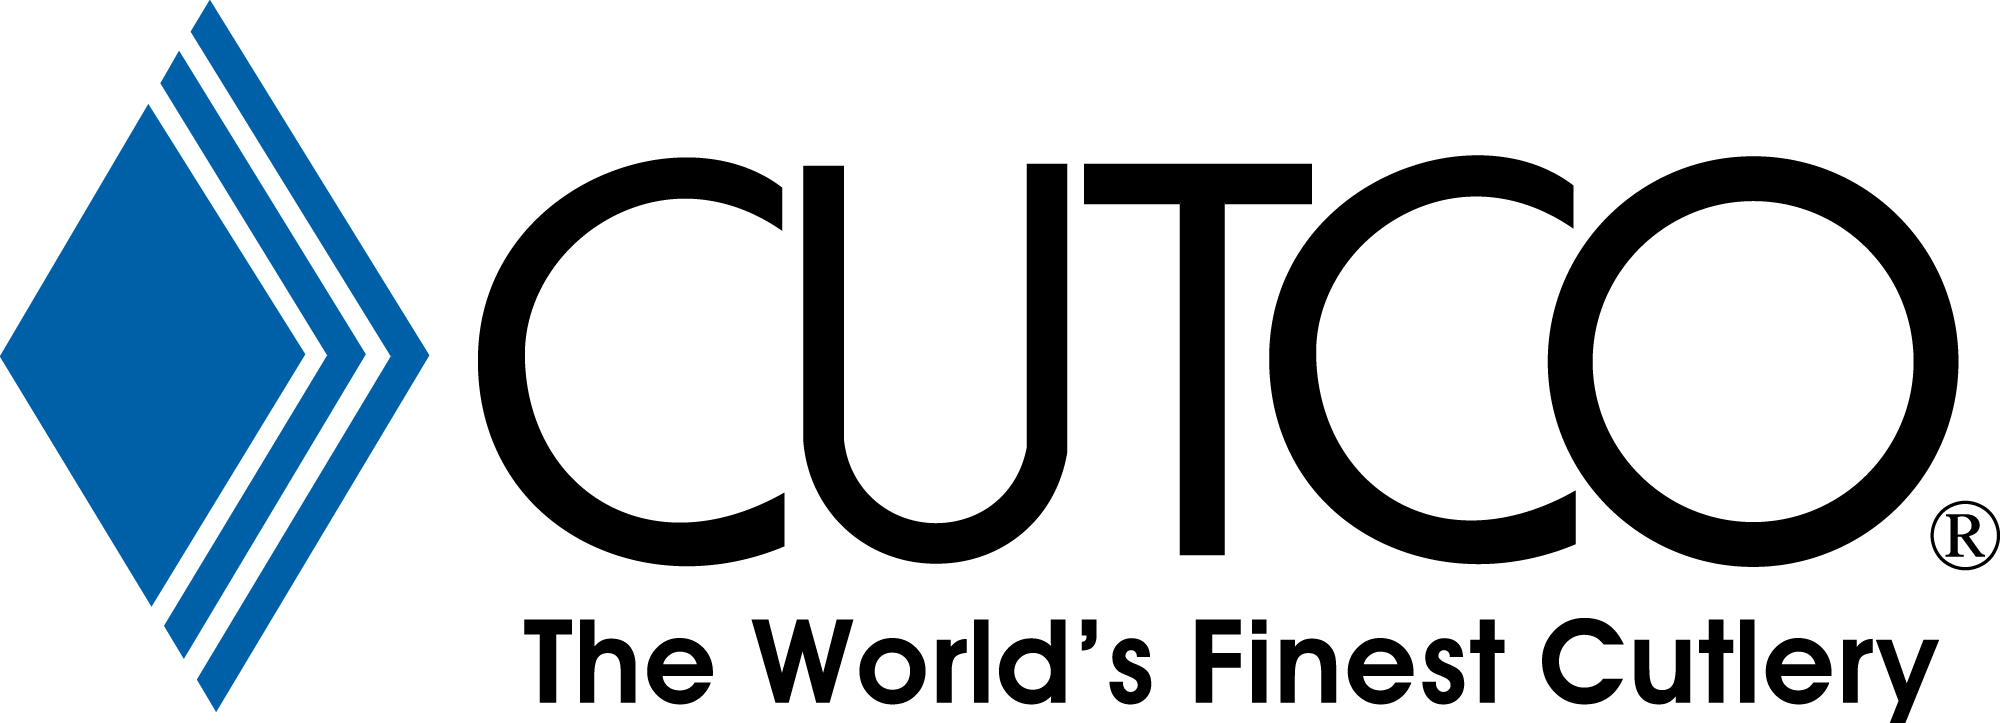 CUTCO Vector Marketing Logo